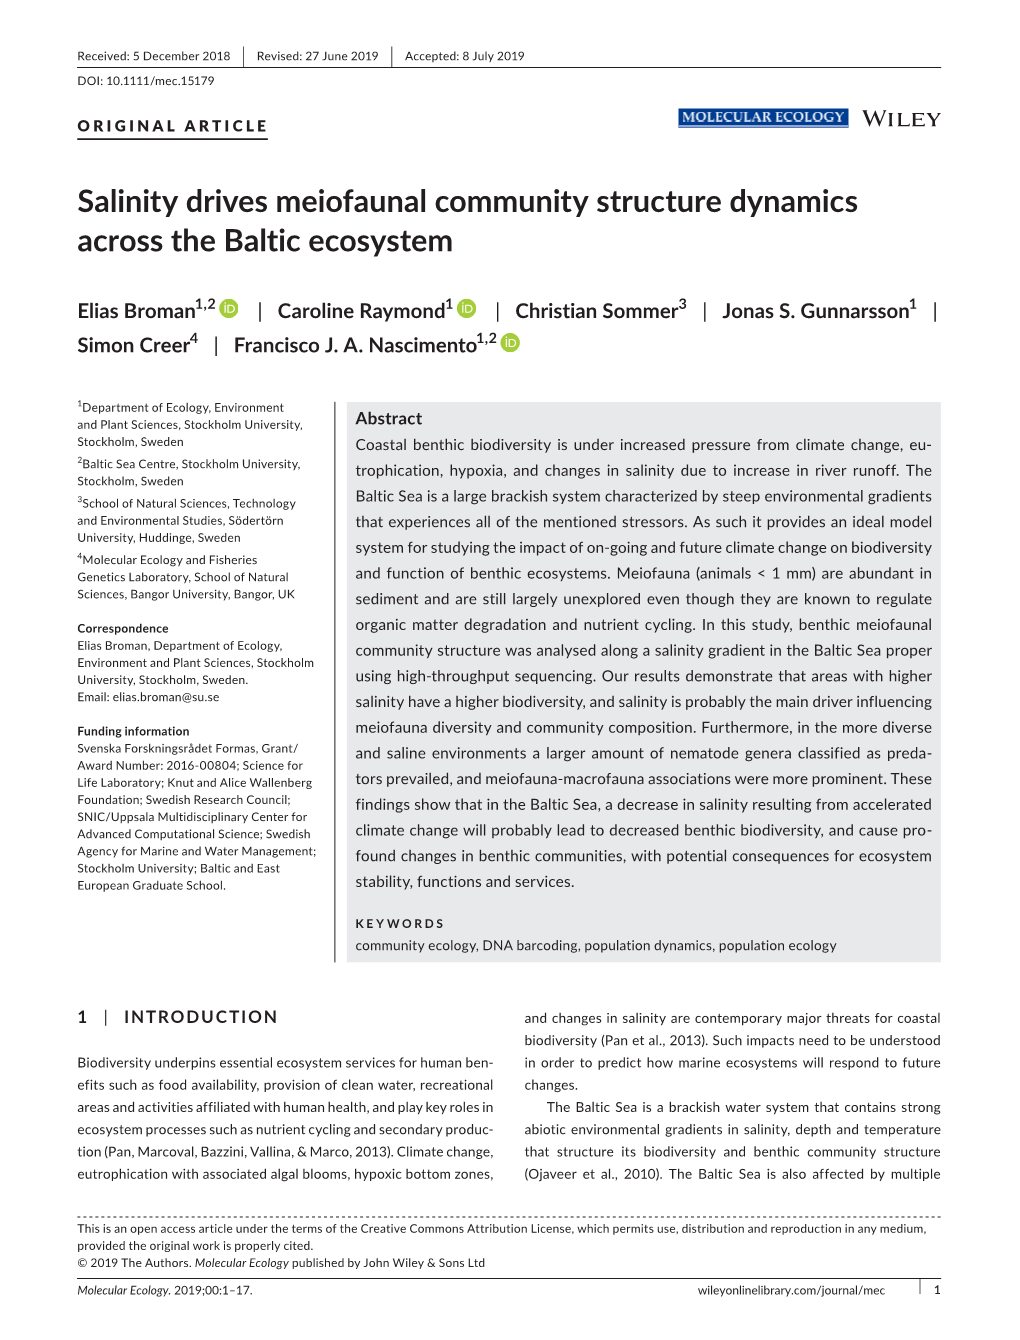 Salinity Drives Meiofaunal Community Structure Dynamics Across the Baltic Ecosystem